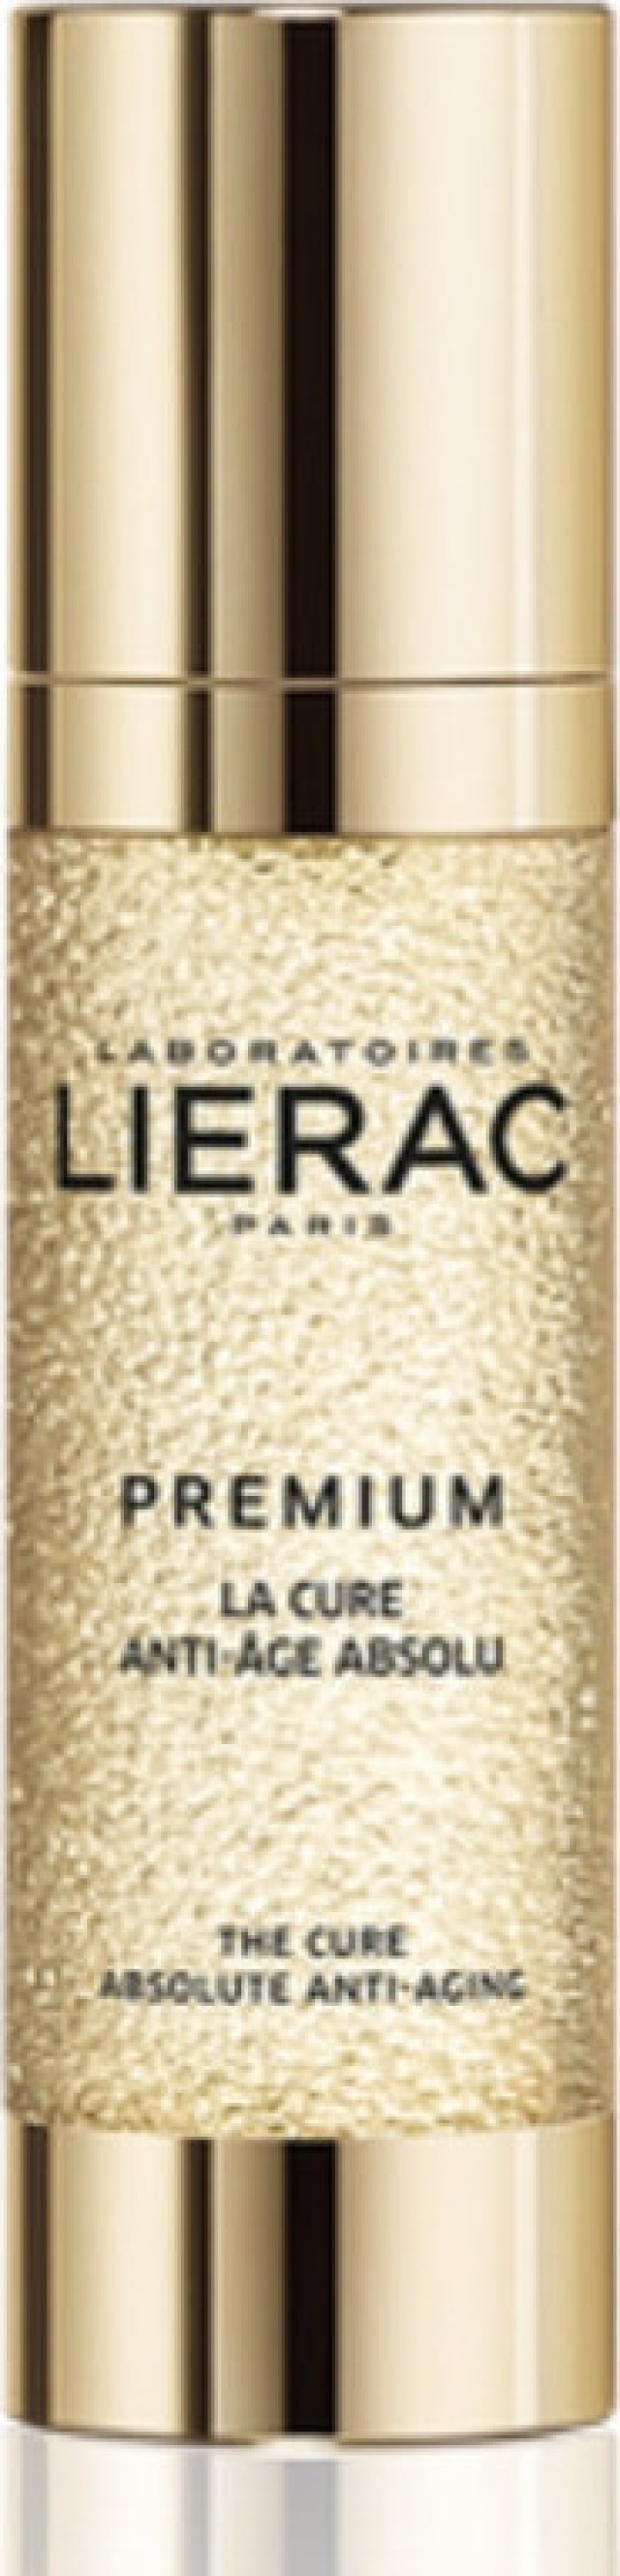 Lierac Premium La Cure Anti-Age Absolu Απόλυτη Αντιγηραντική Αγωγή Νεότητας 30ml